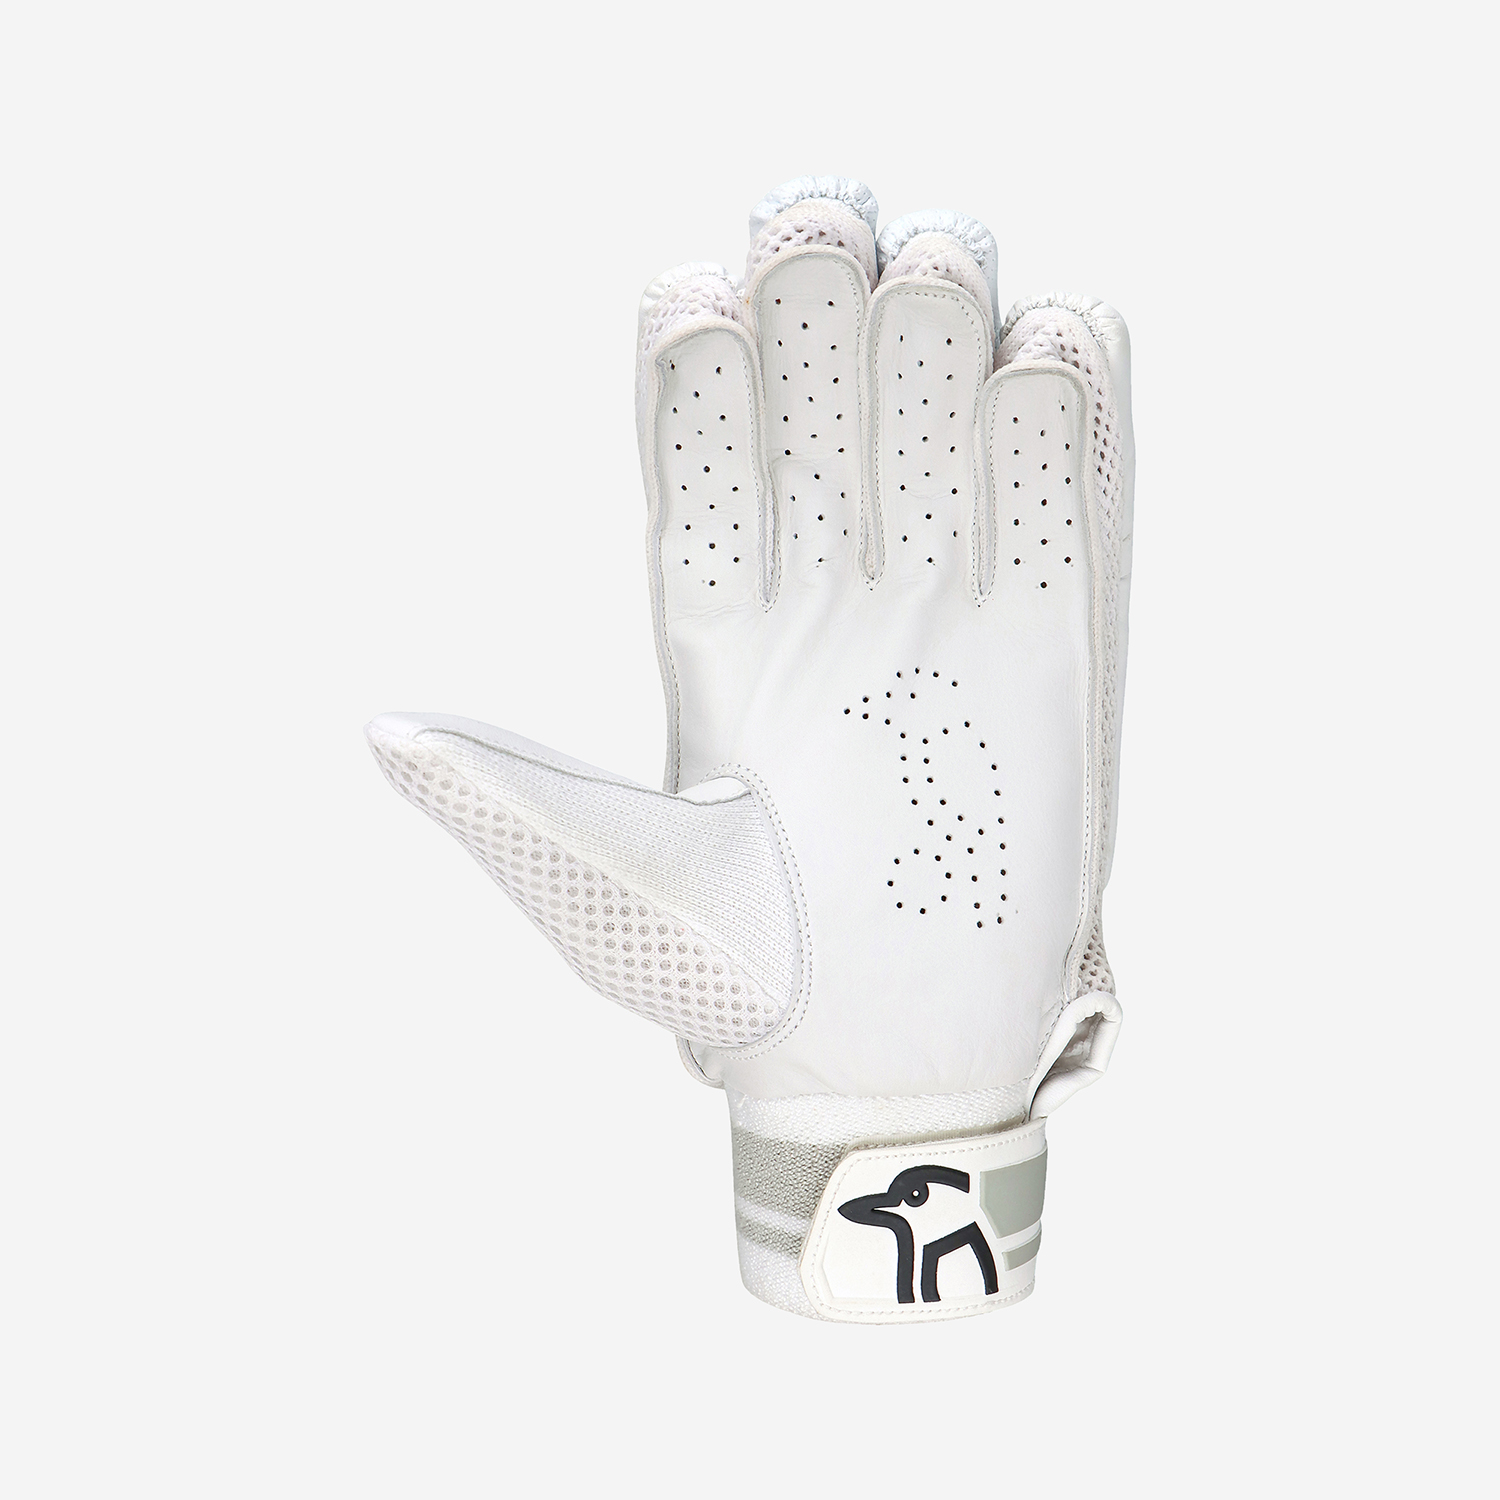 Pro 7.0 Ghost Batting Gloves